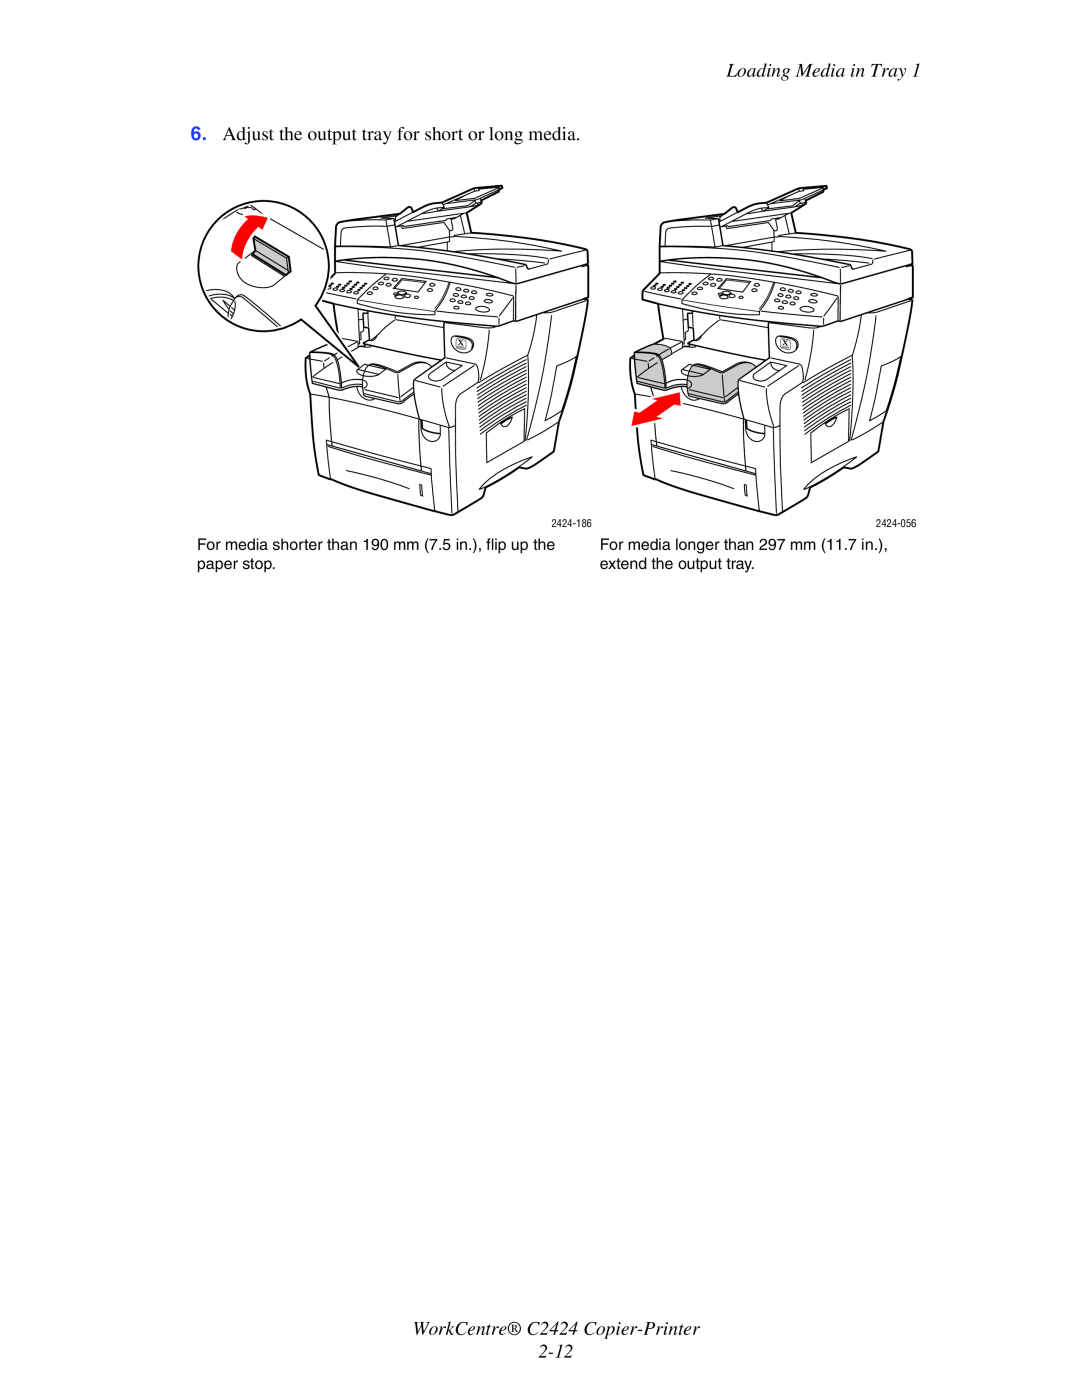 Xerox manual WorkCentre C2424 Copier-Printer, Loading Media in Tray, For media longer than 297 mm 11.7 in, paper stop 